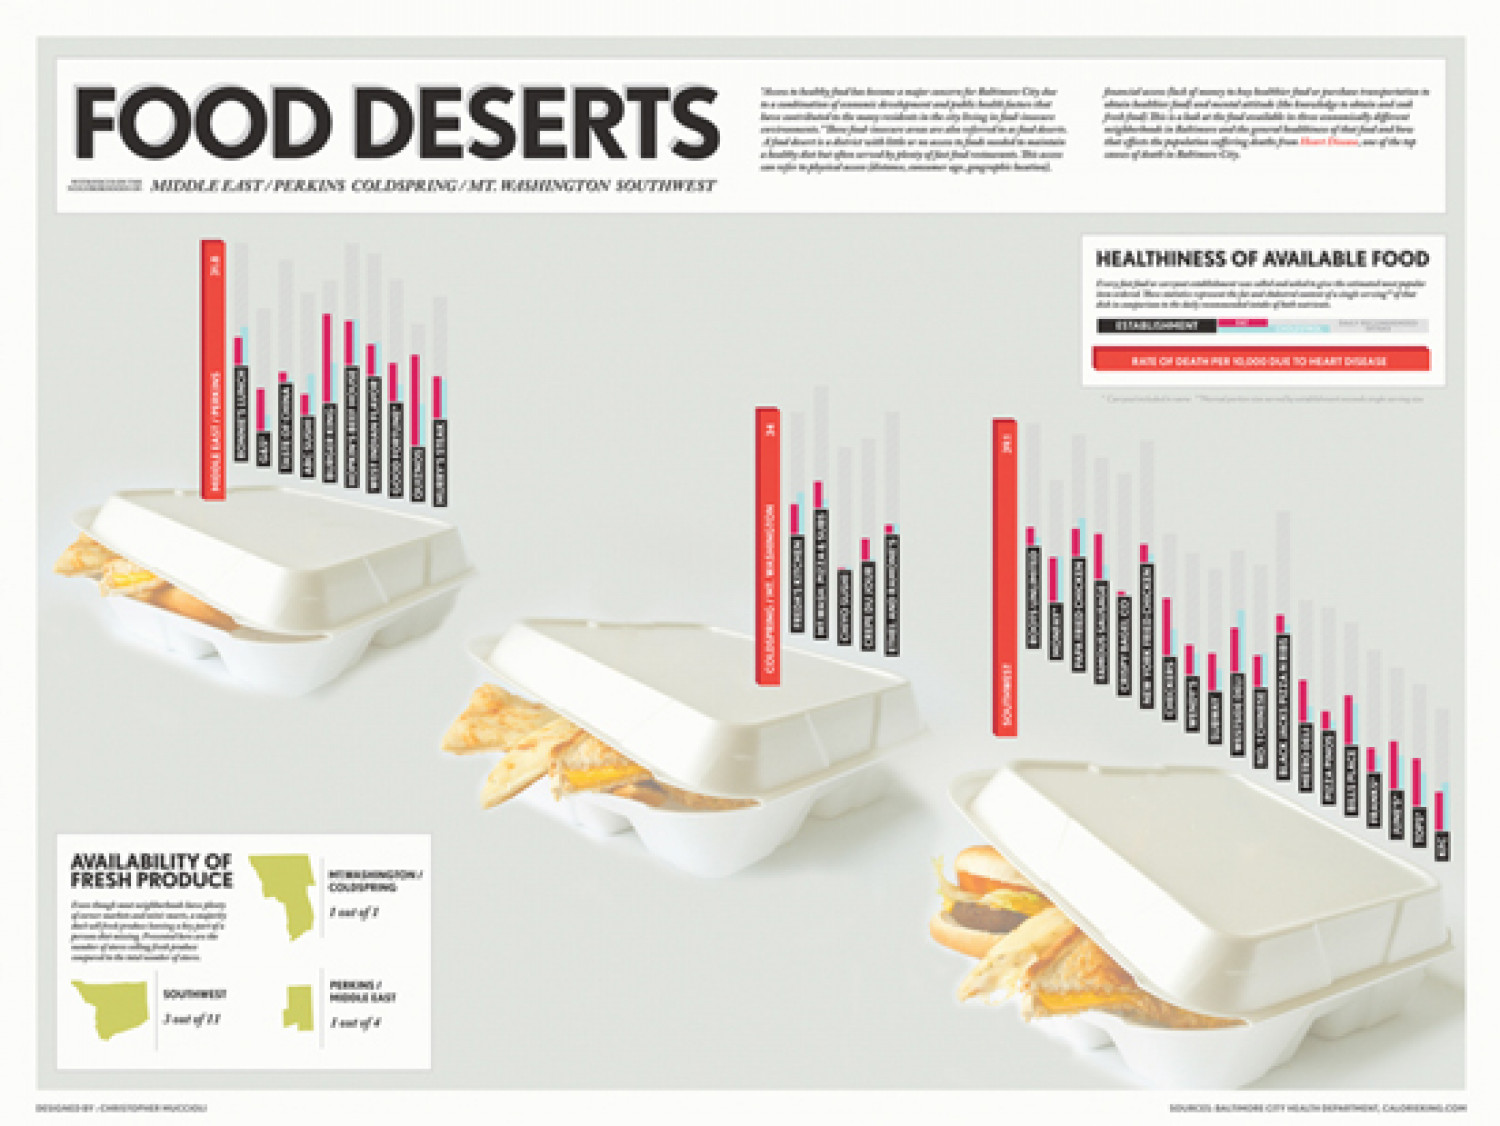 Food Deserts Infographic